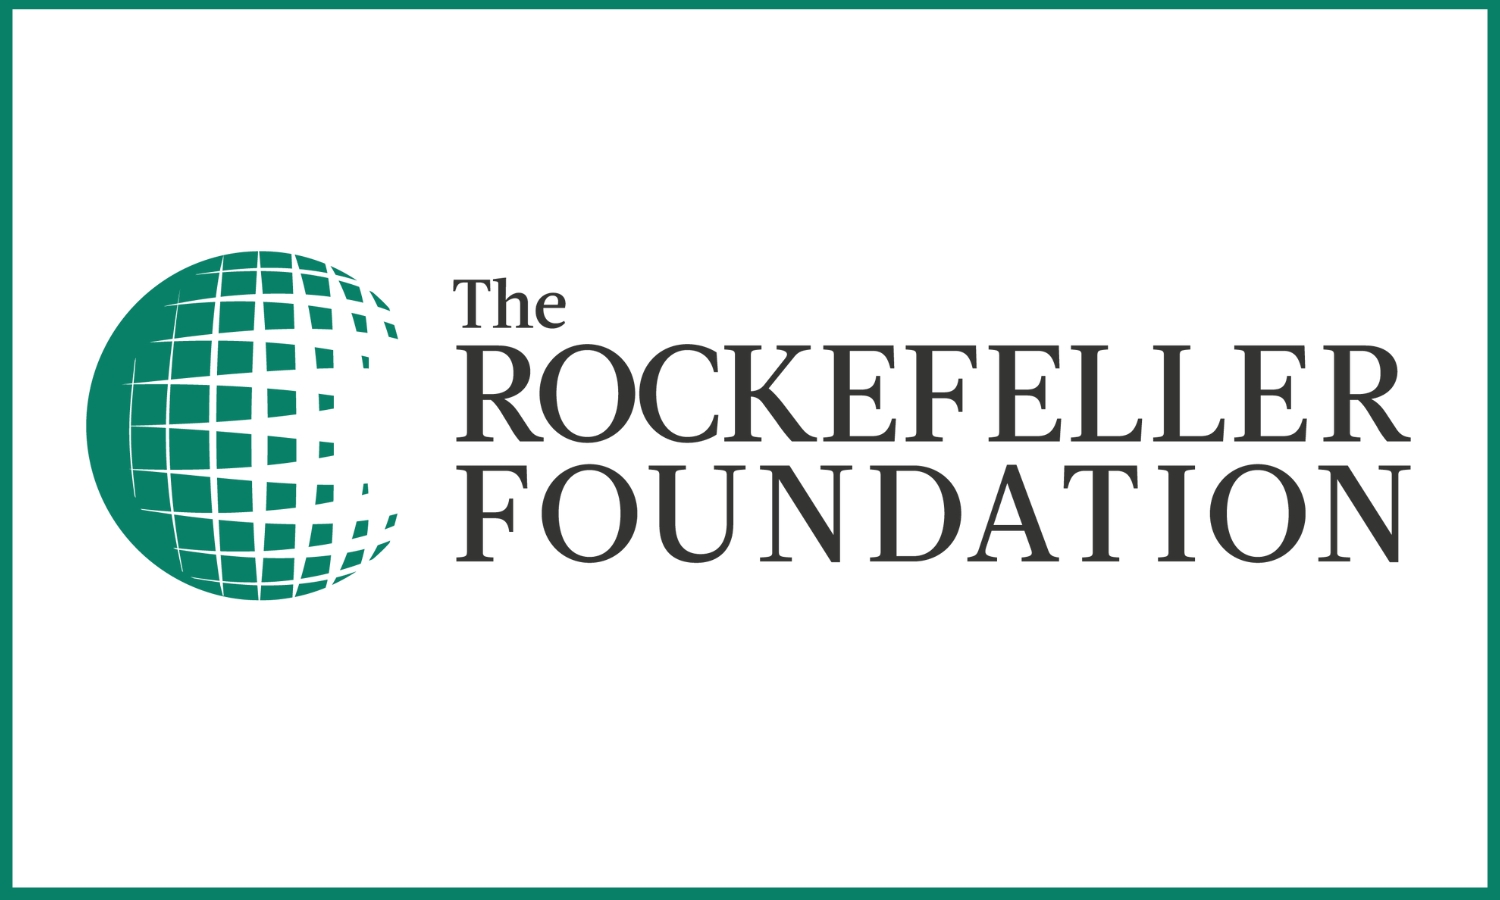 Rockefeller foundation logo